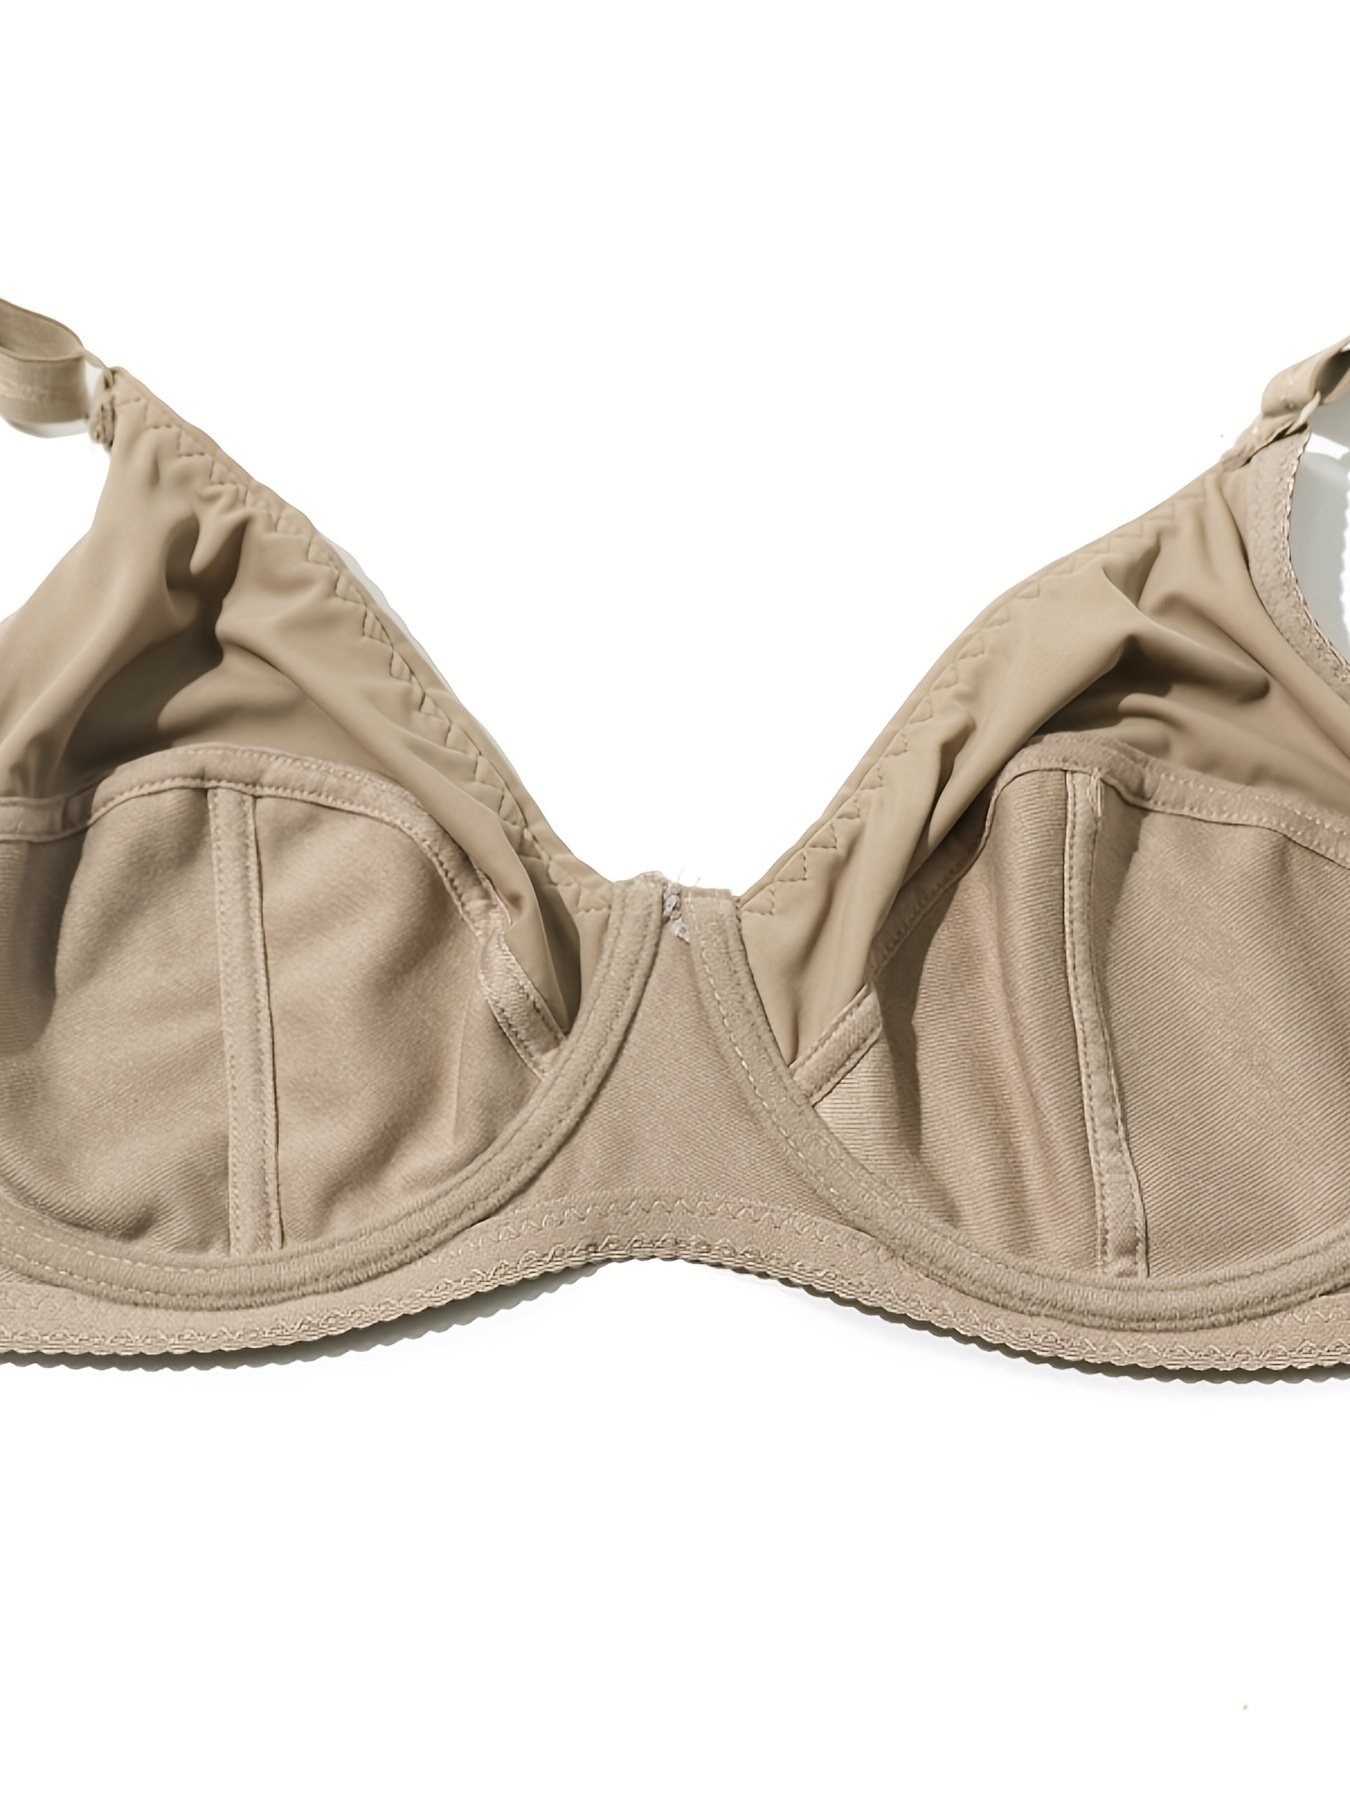 PARIFIARY lingerie set seamless bra and panty underwear set